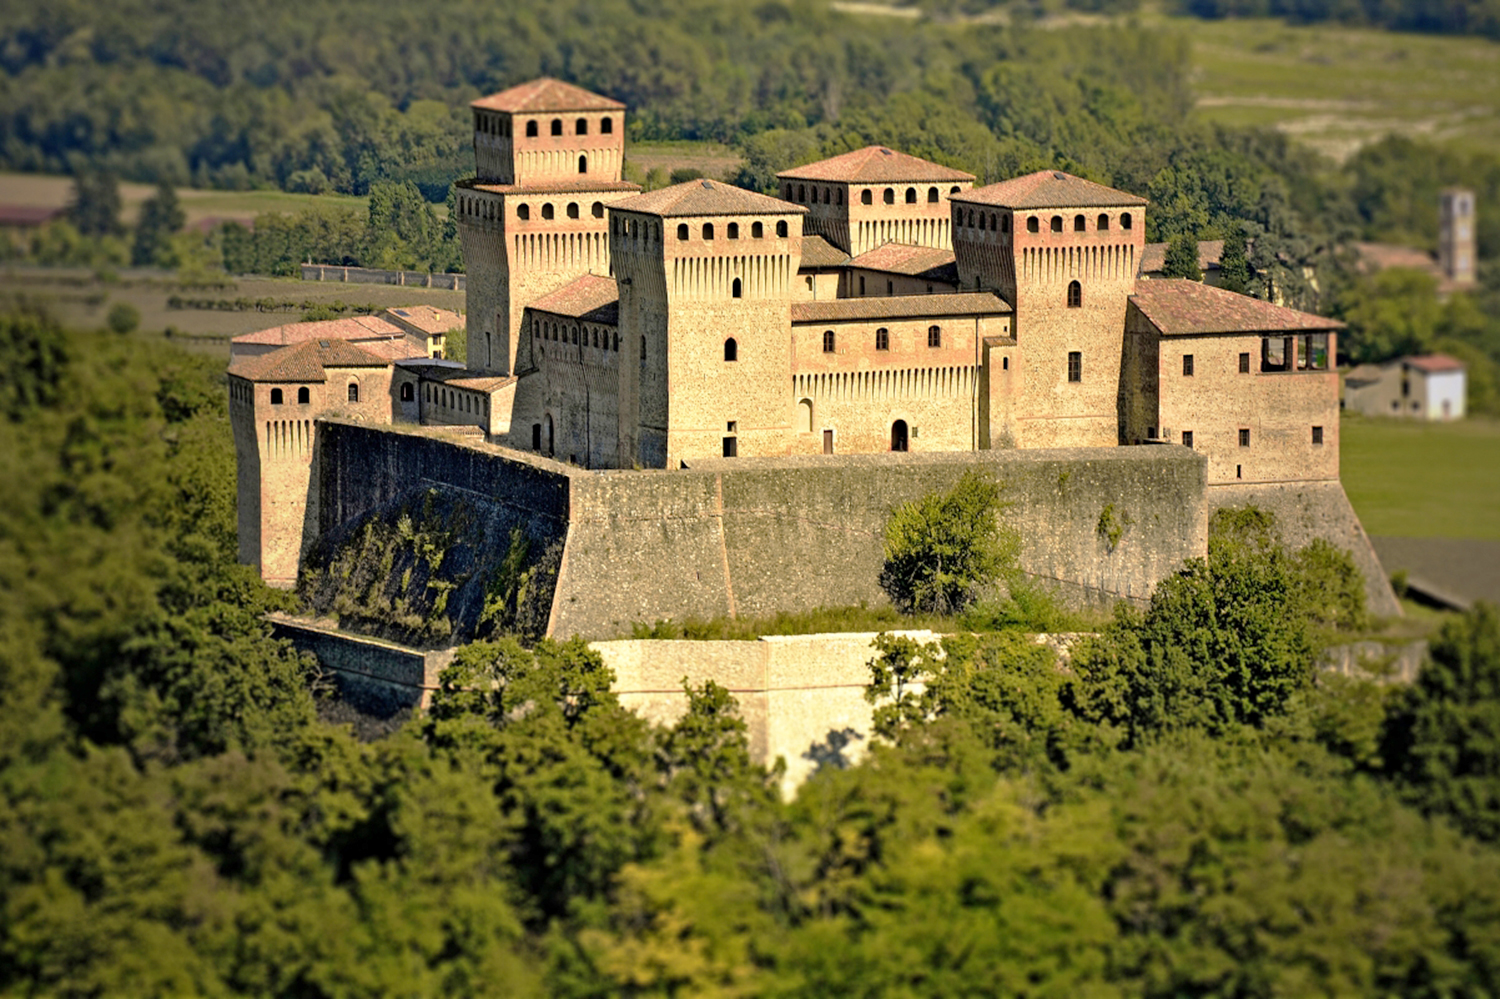 castello_di_torrechiara-parma travel guide